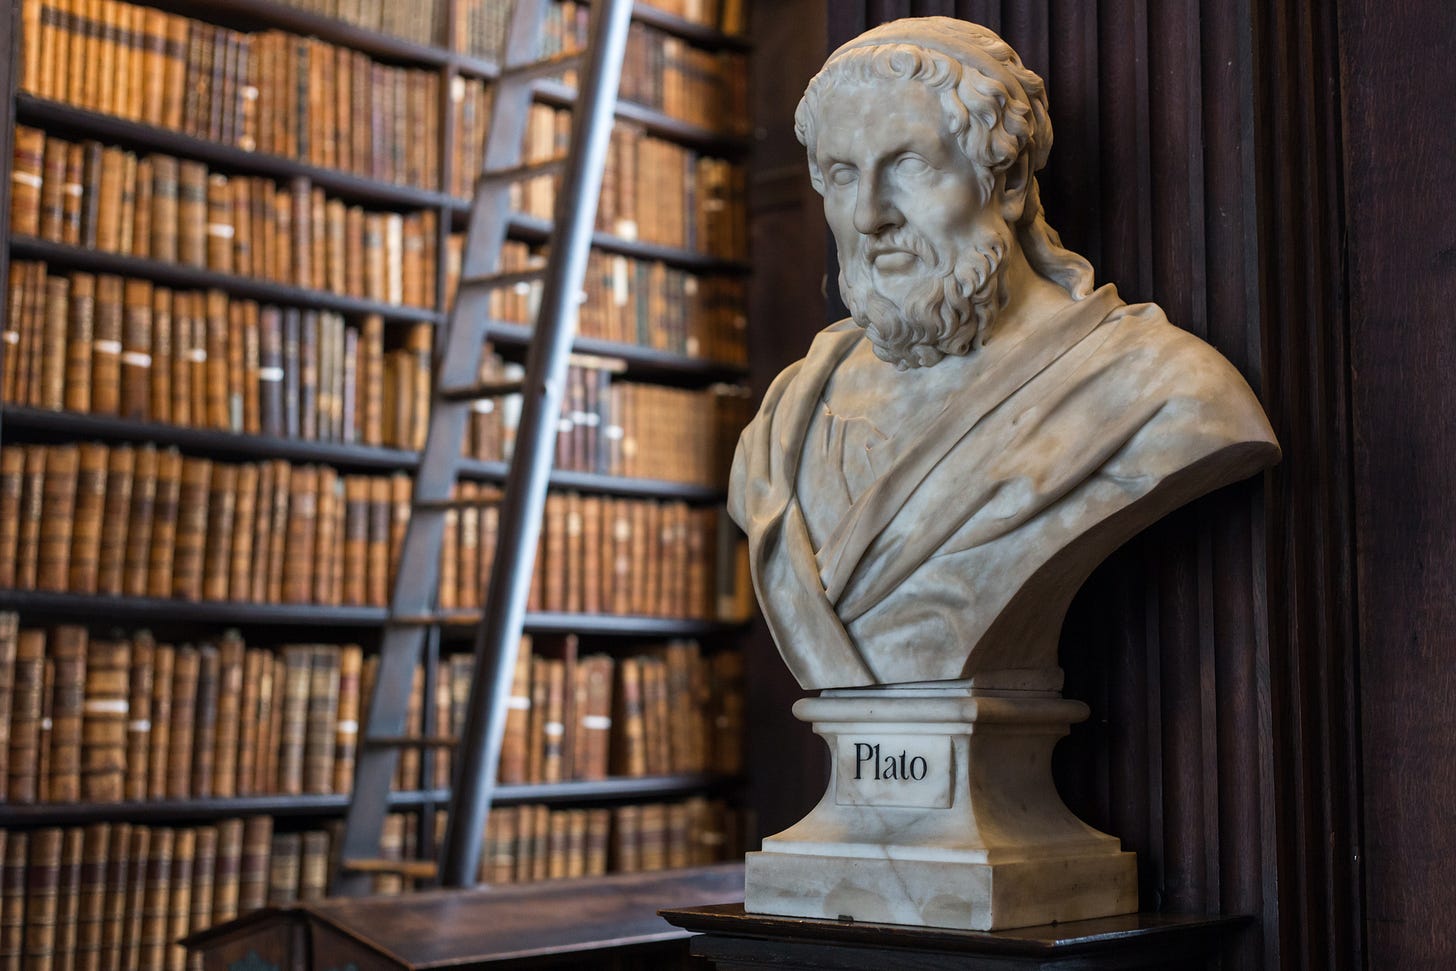 Plato bust in Trinity College